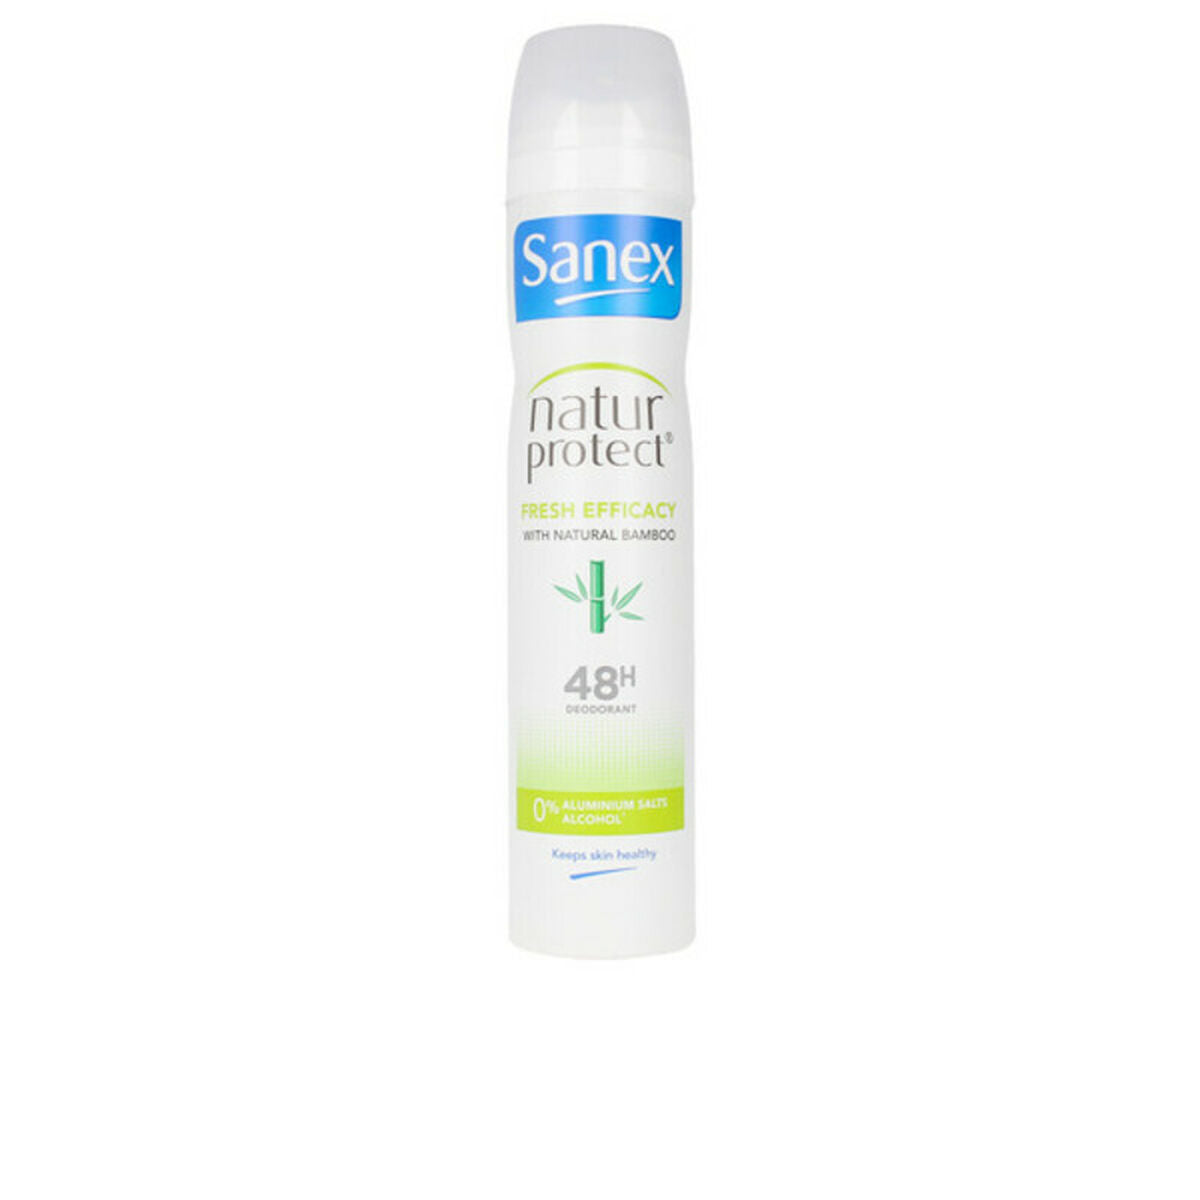 Spray deodorant natur beskytte 0% fersk bambus Sanex 124-7131 200 ml